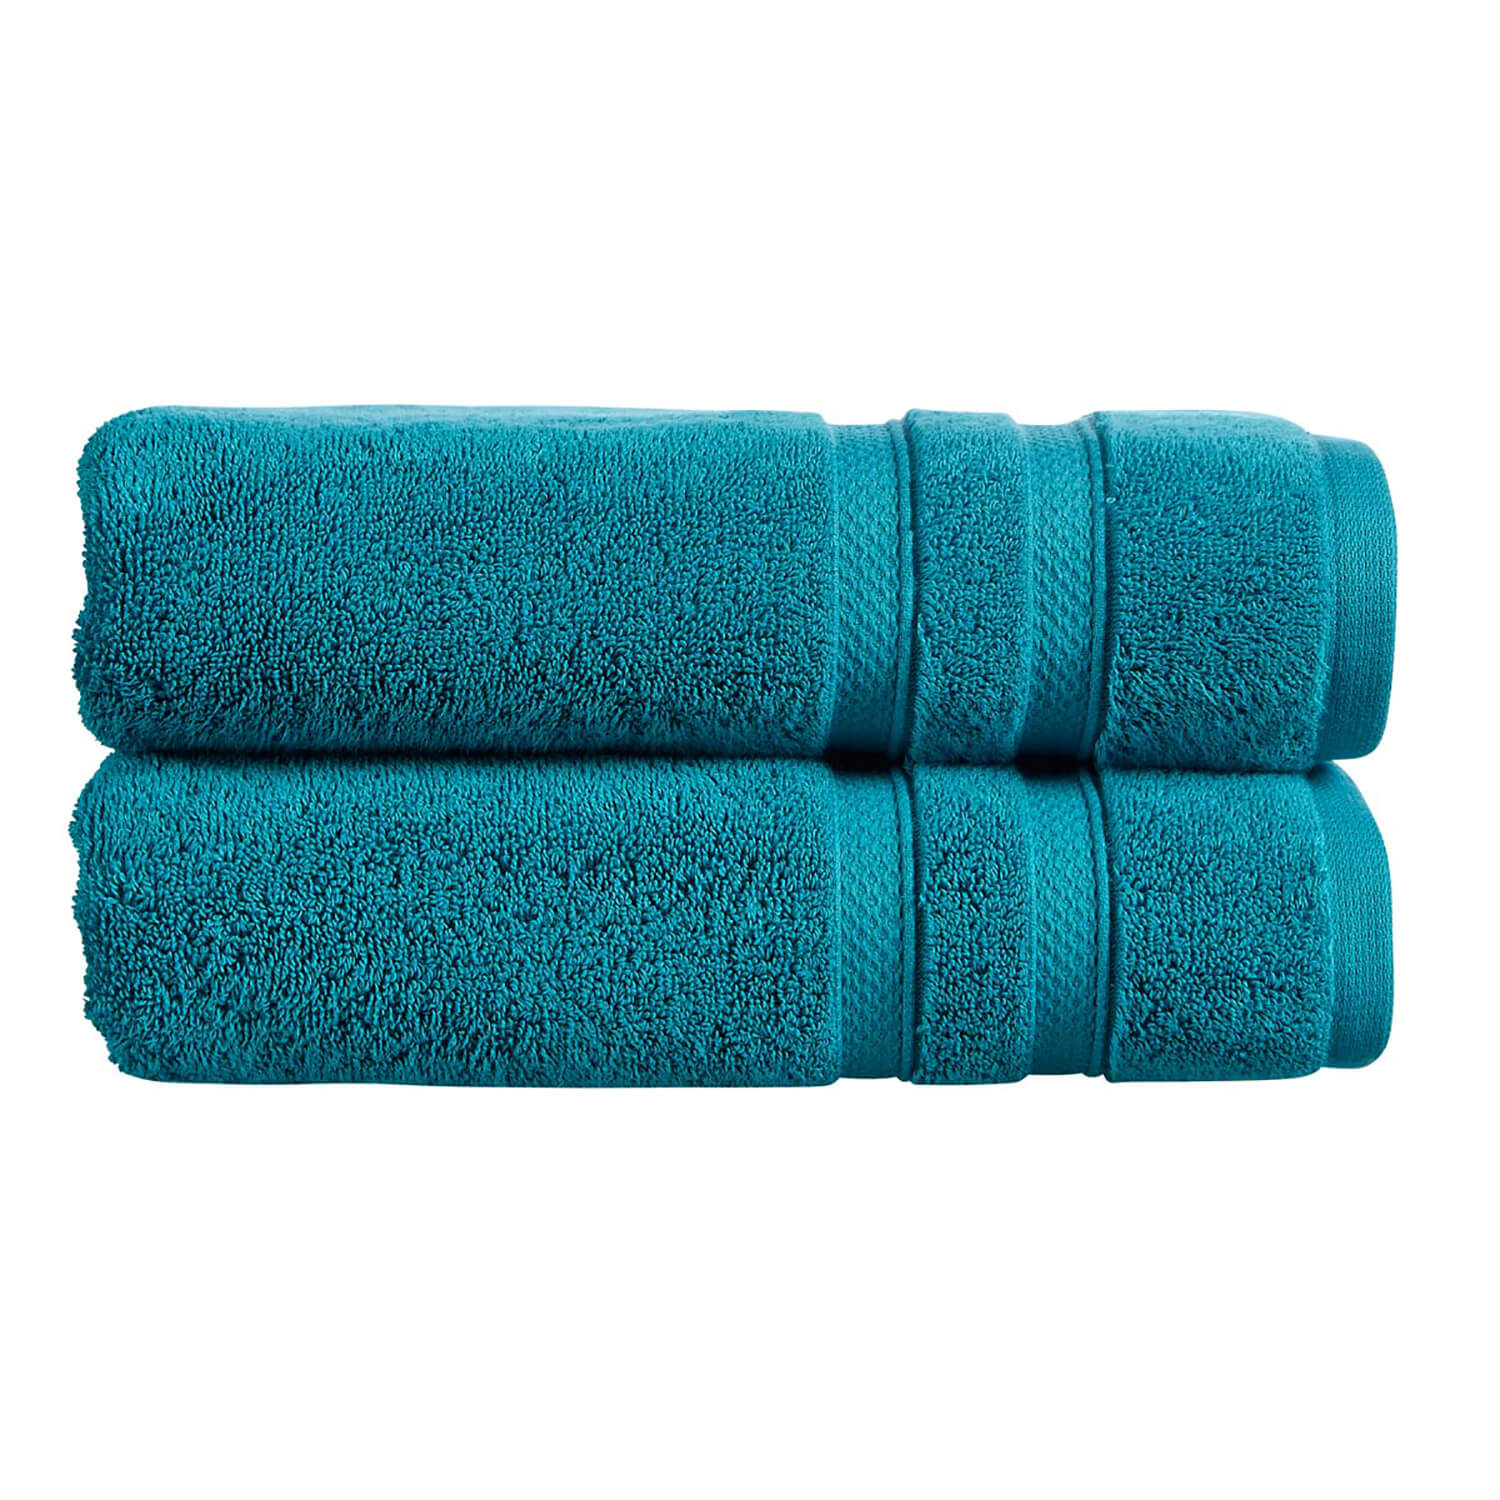 Christy Chroma Bath Towel - Lagoon 1 Shaws Department Stores